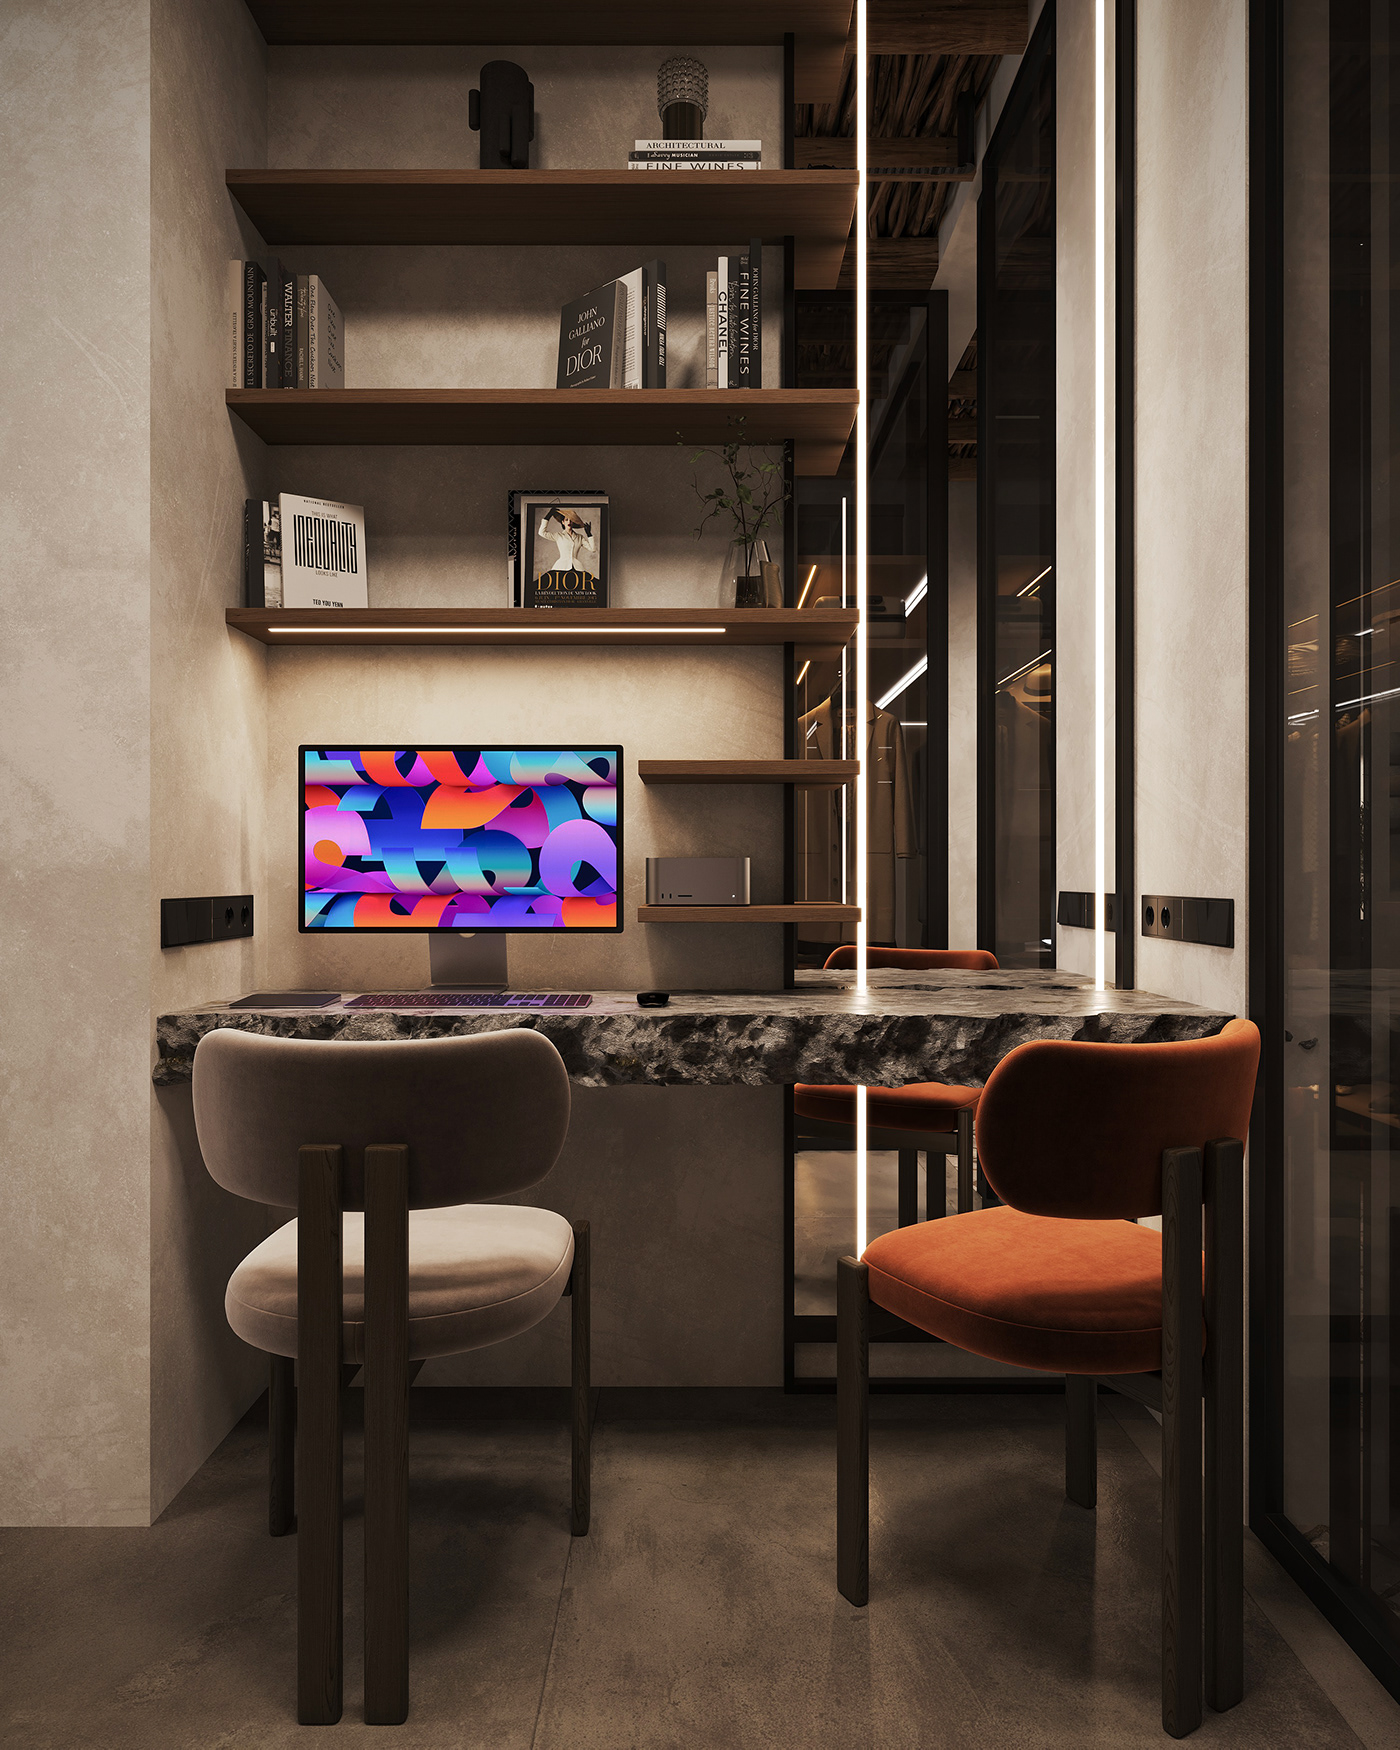 3ds max architecture visualization corona Render 3D interior design  Interior archviz CGI